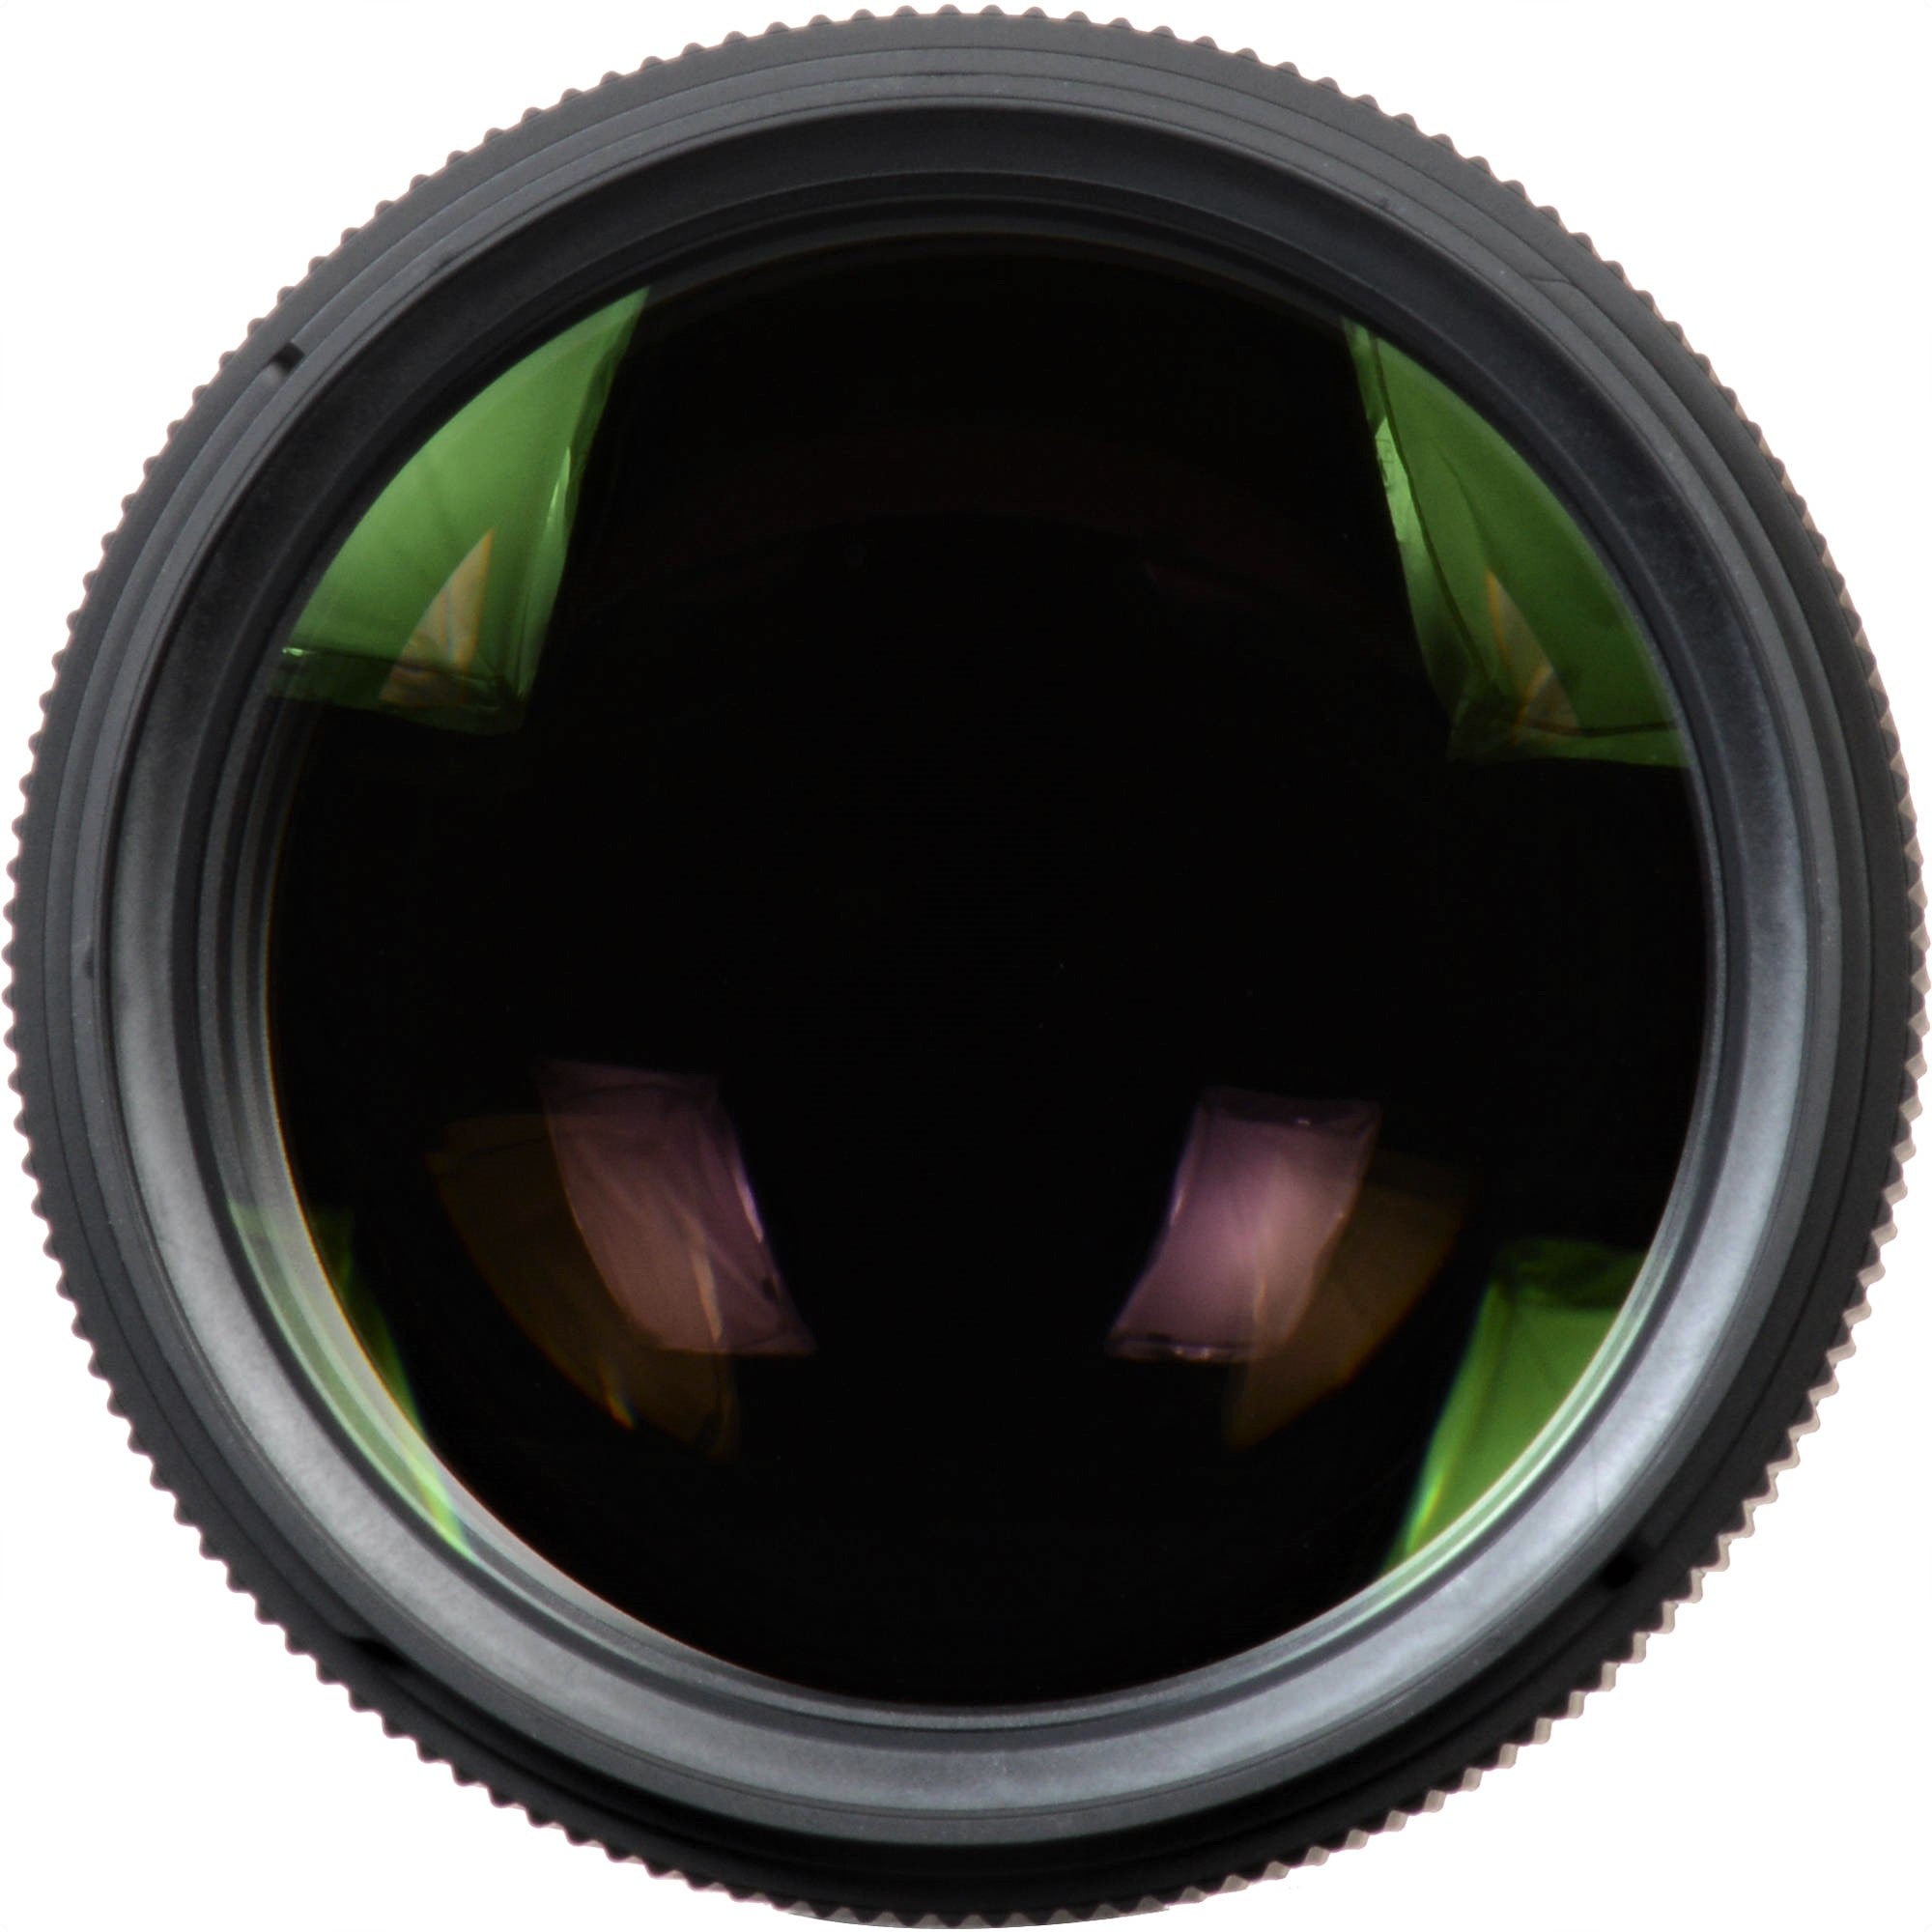 Sigma 135mm F1.8 DG HSM Art Lens for Leica L